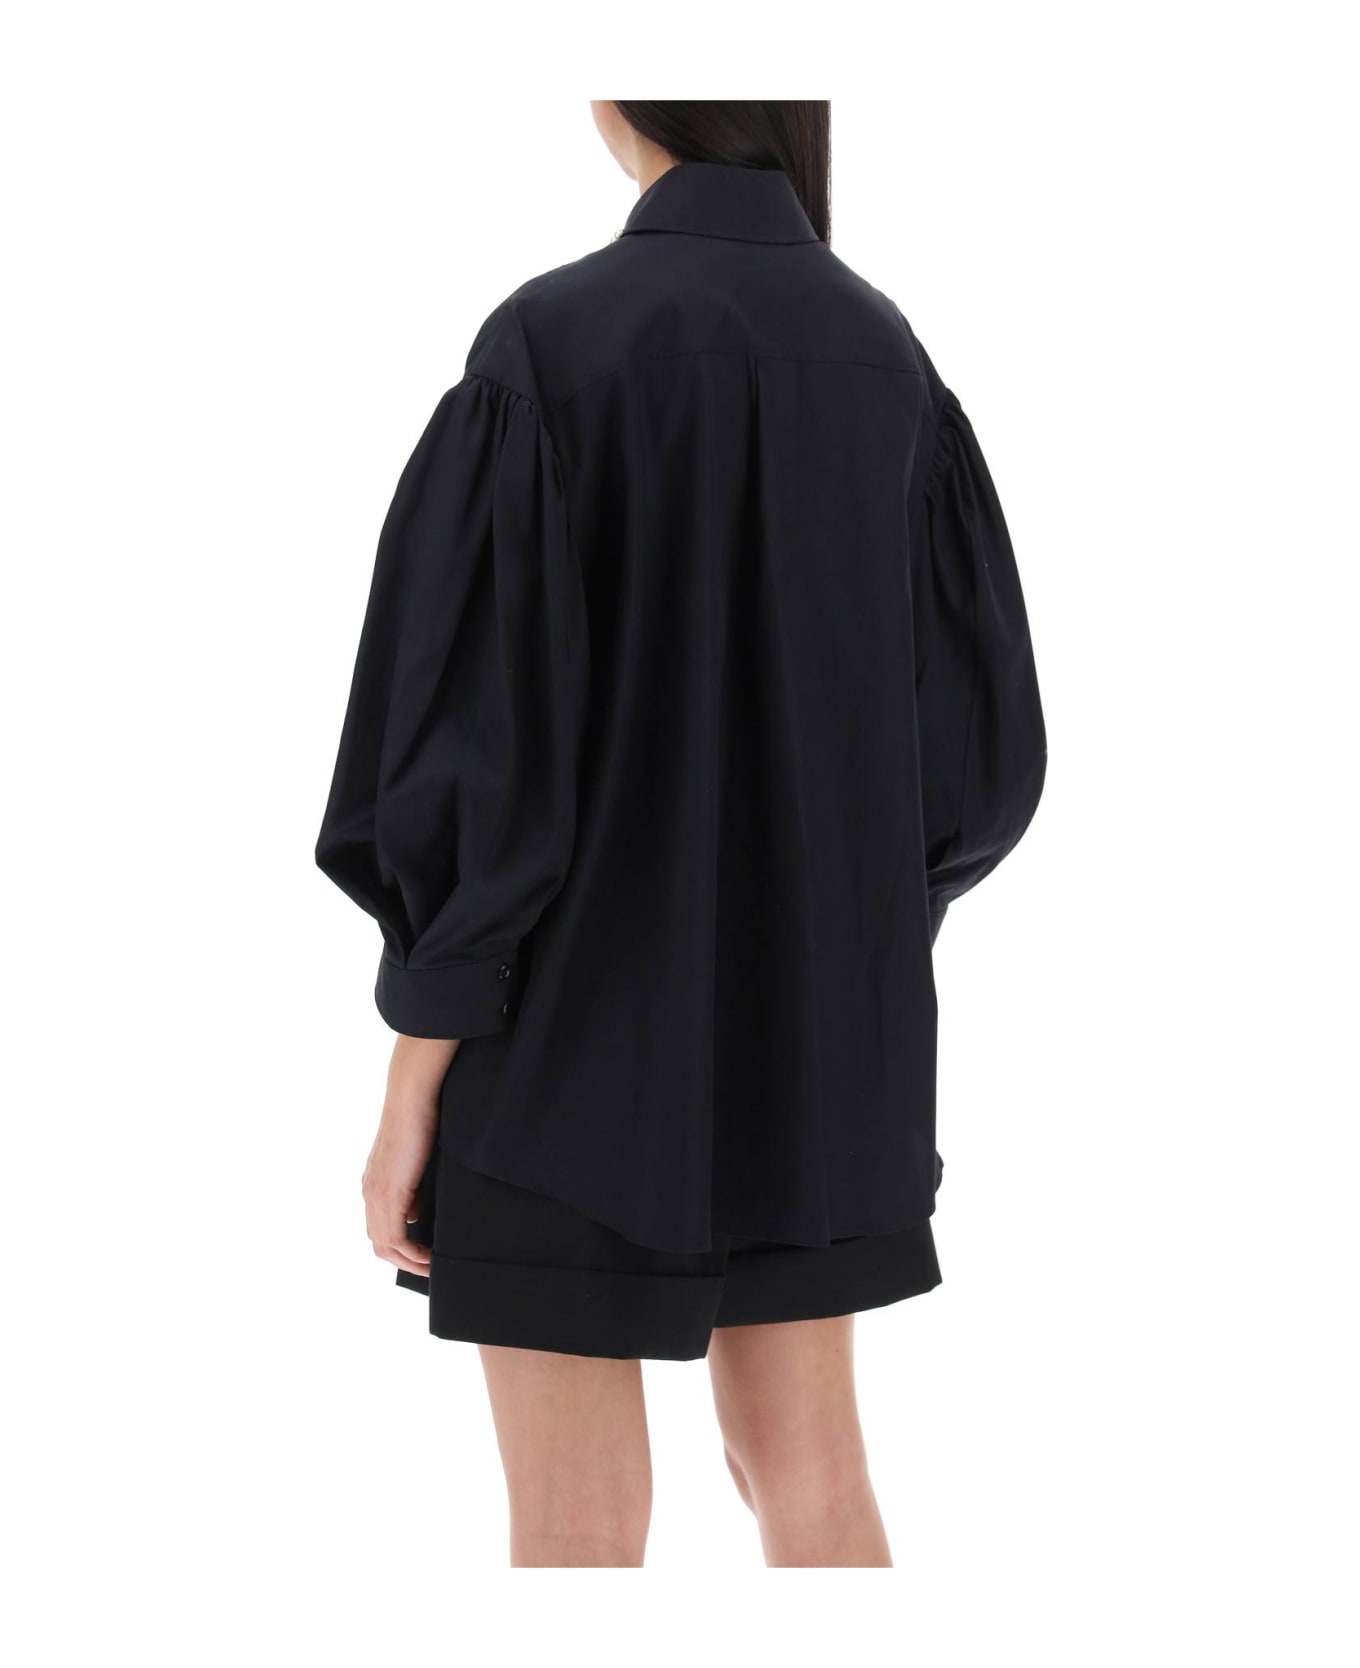 Simone Rocha Puff Sleeve Shirt With Embellishment - BLACK PEARL (Black)